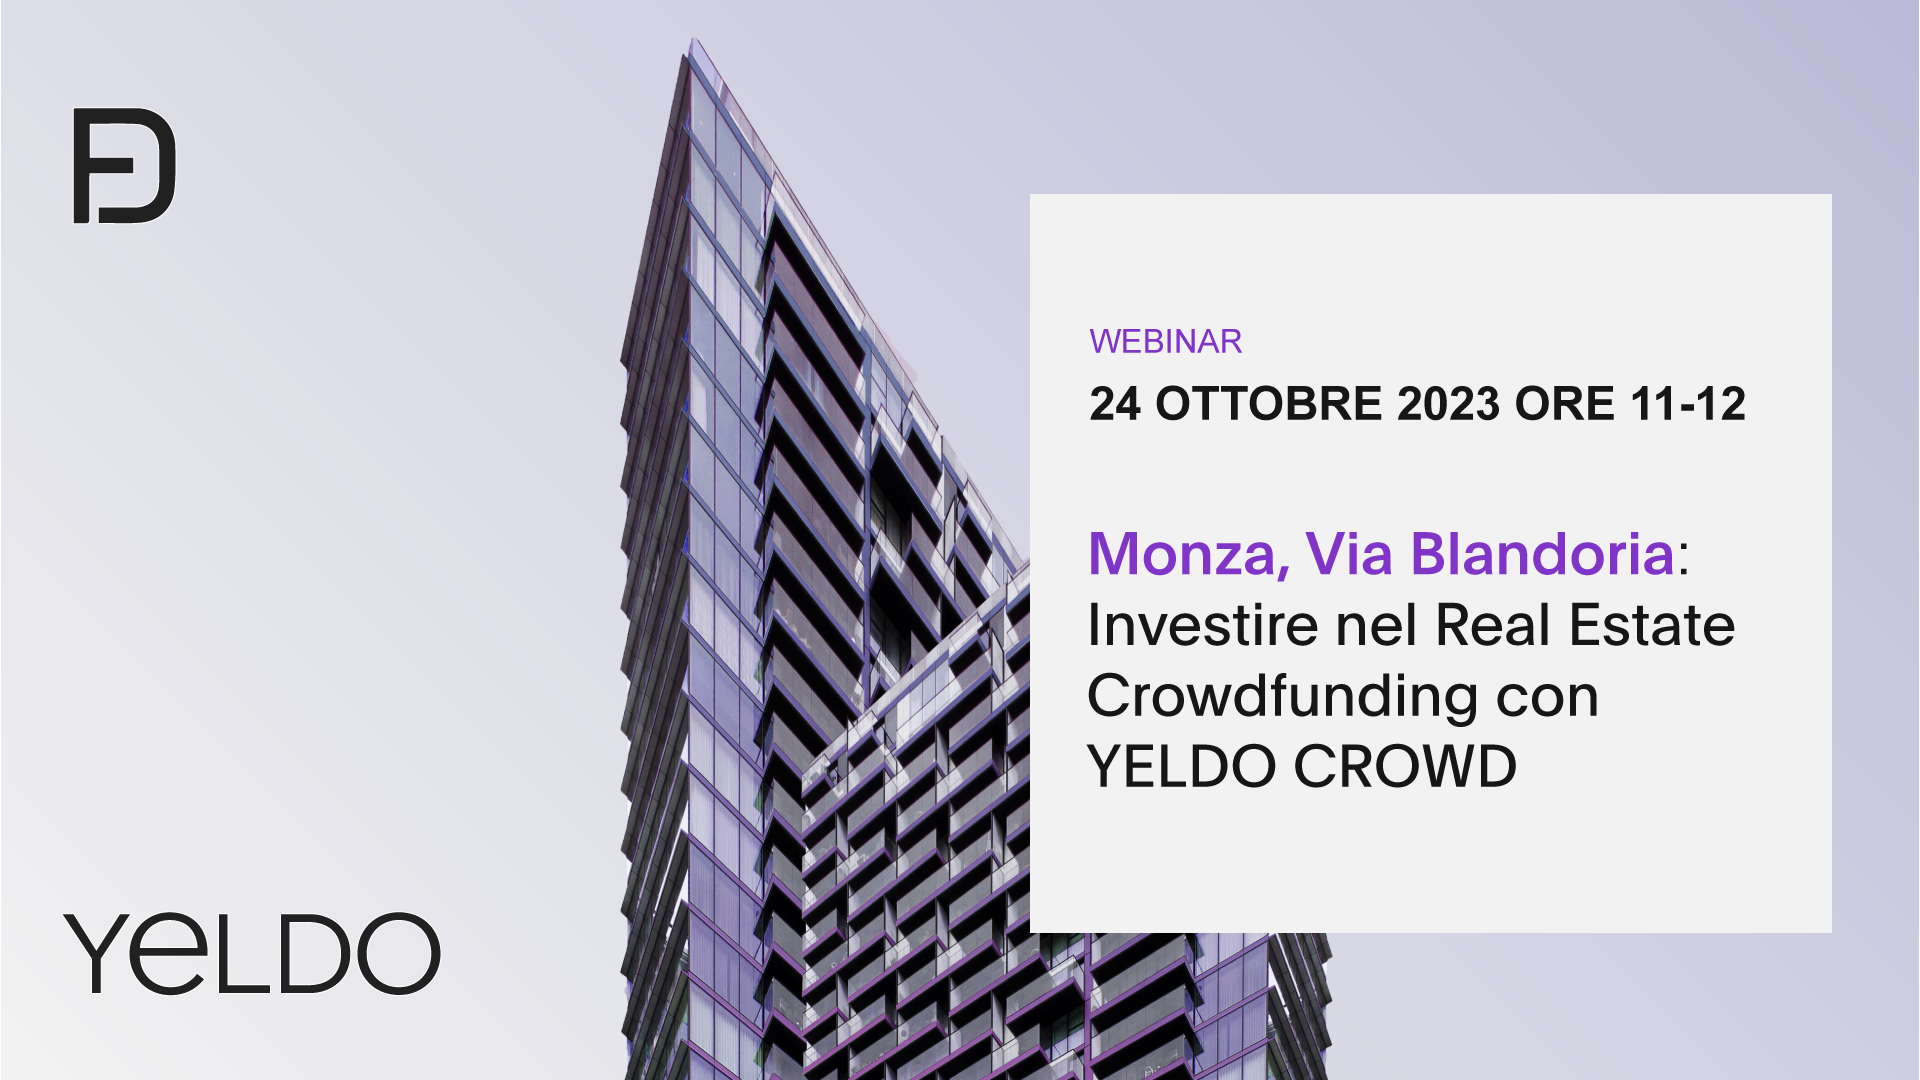 Monza, via Blandoria: Investire nel Real Estate crowdfunding con YELDO CROWD